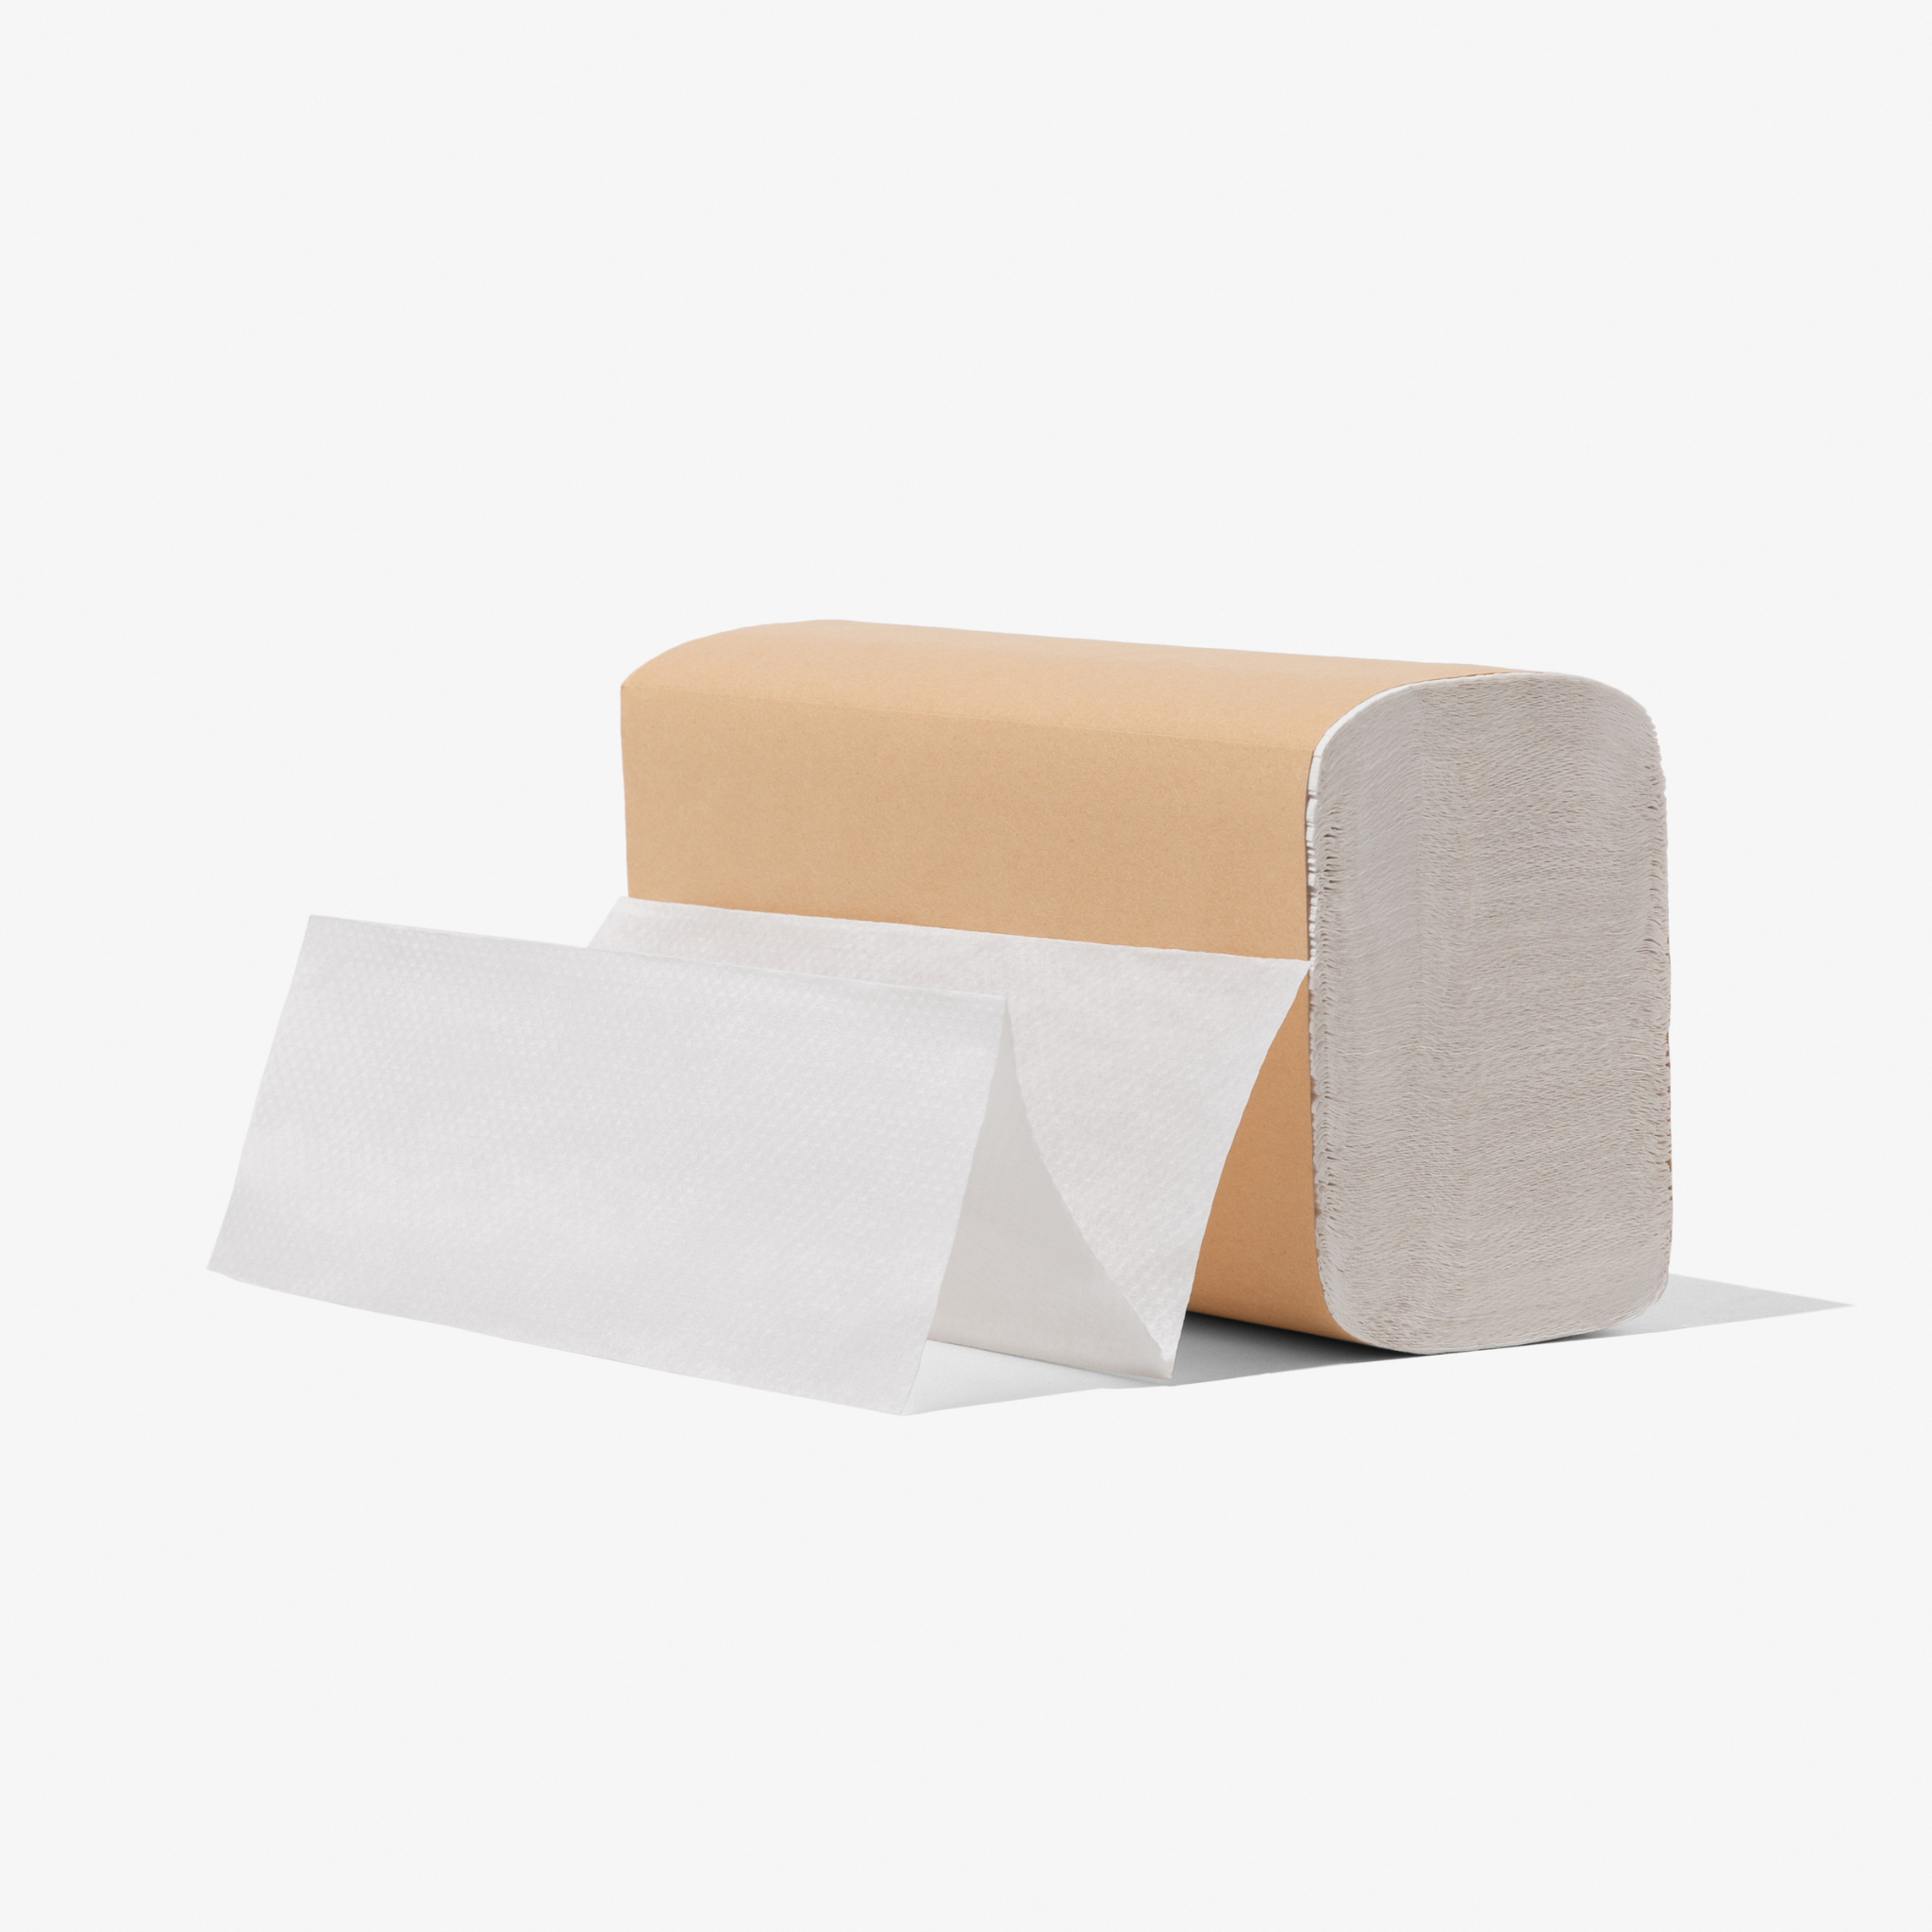 Wholesale Paper Towels Multi fold Brown Natural